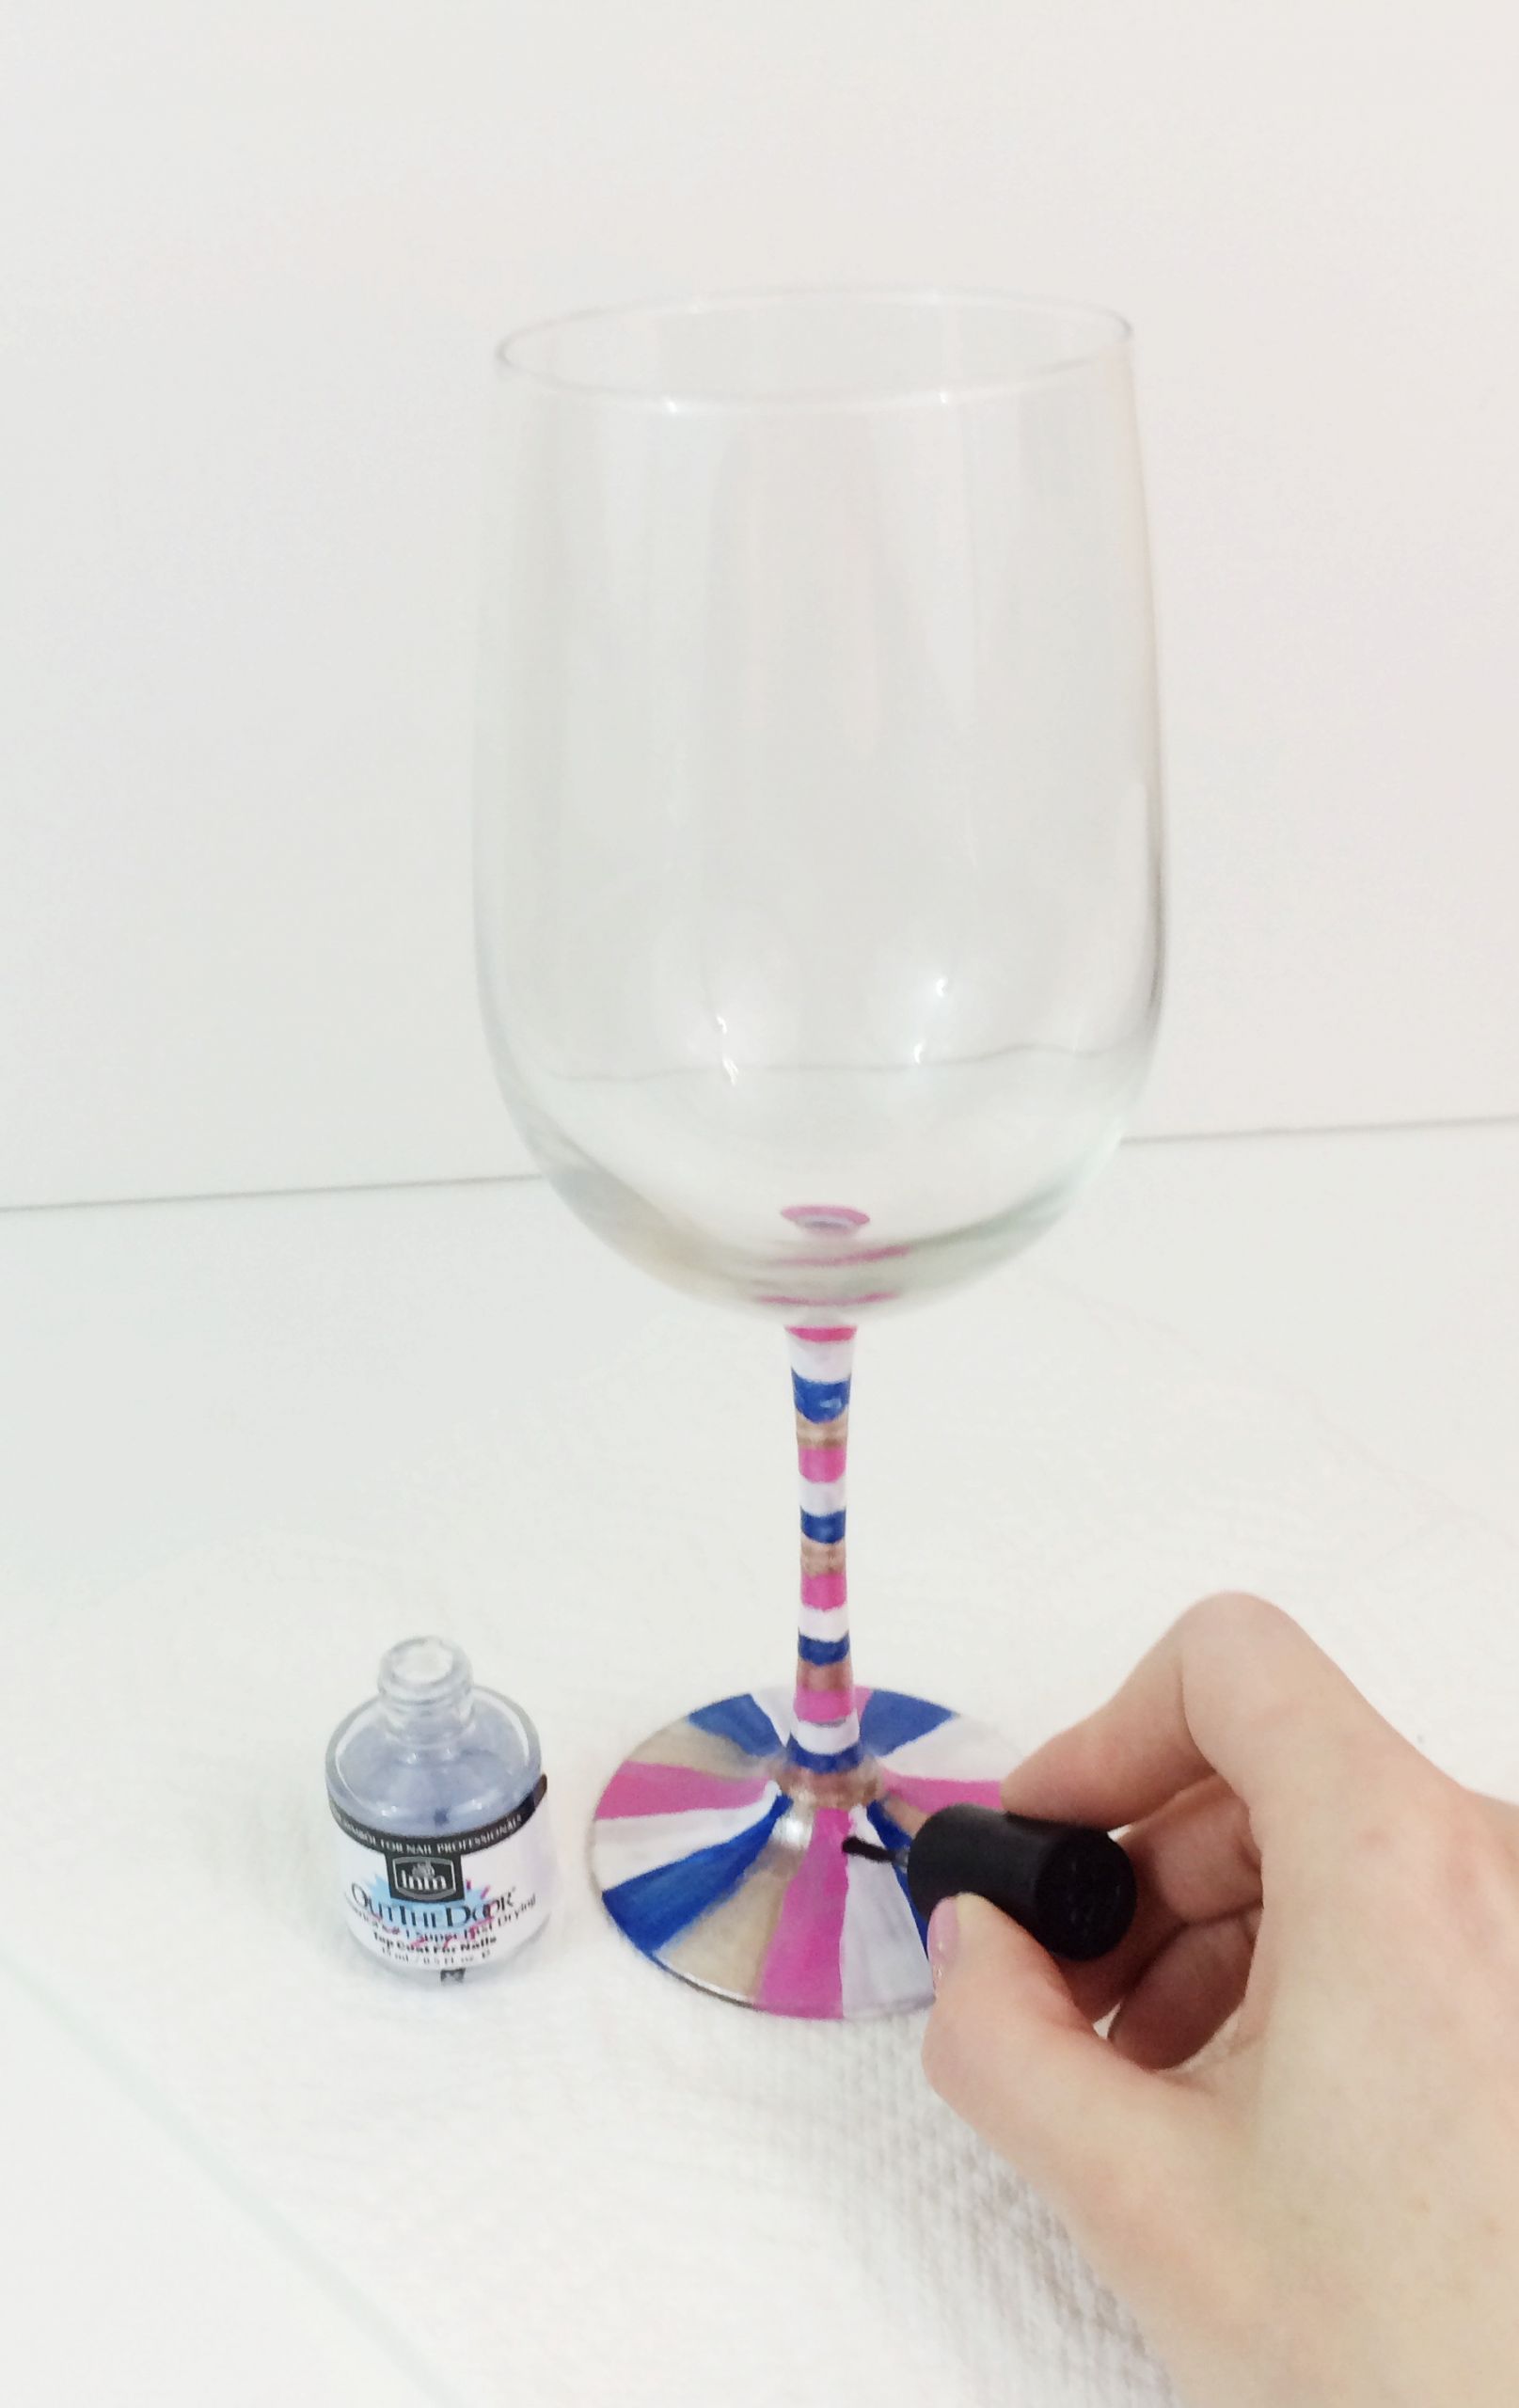 DIY Wine Glass Decorations
 EASY WINE GLASS DECORATING DIY